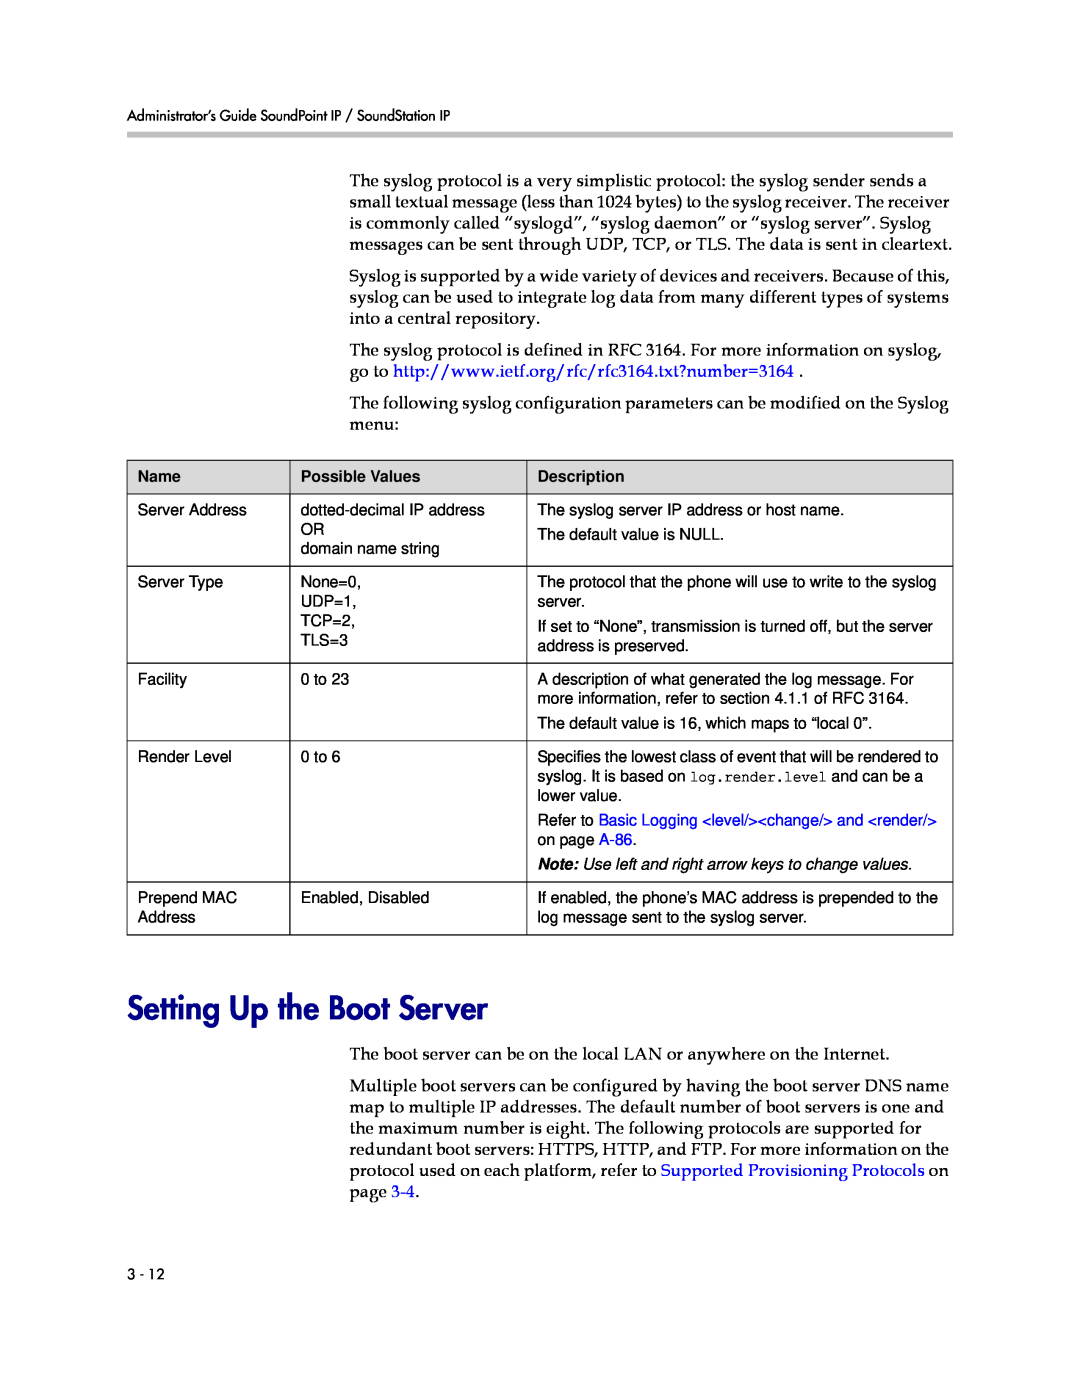 Polycom SIP 3.1 manual Setting Up the Boot Server 